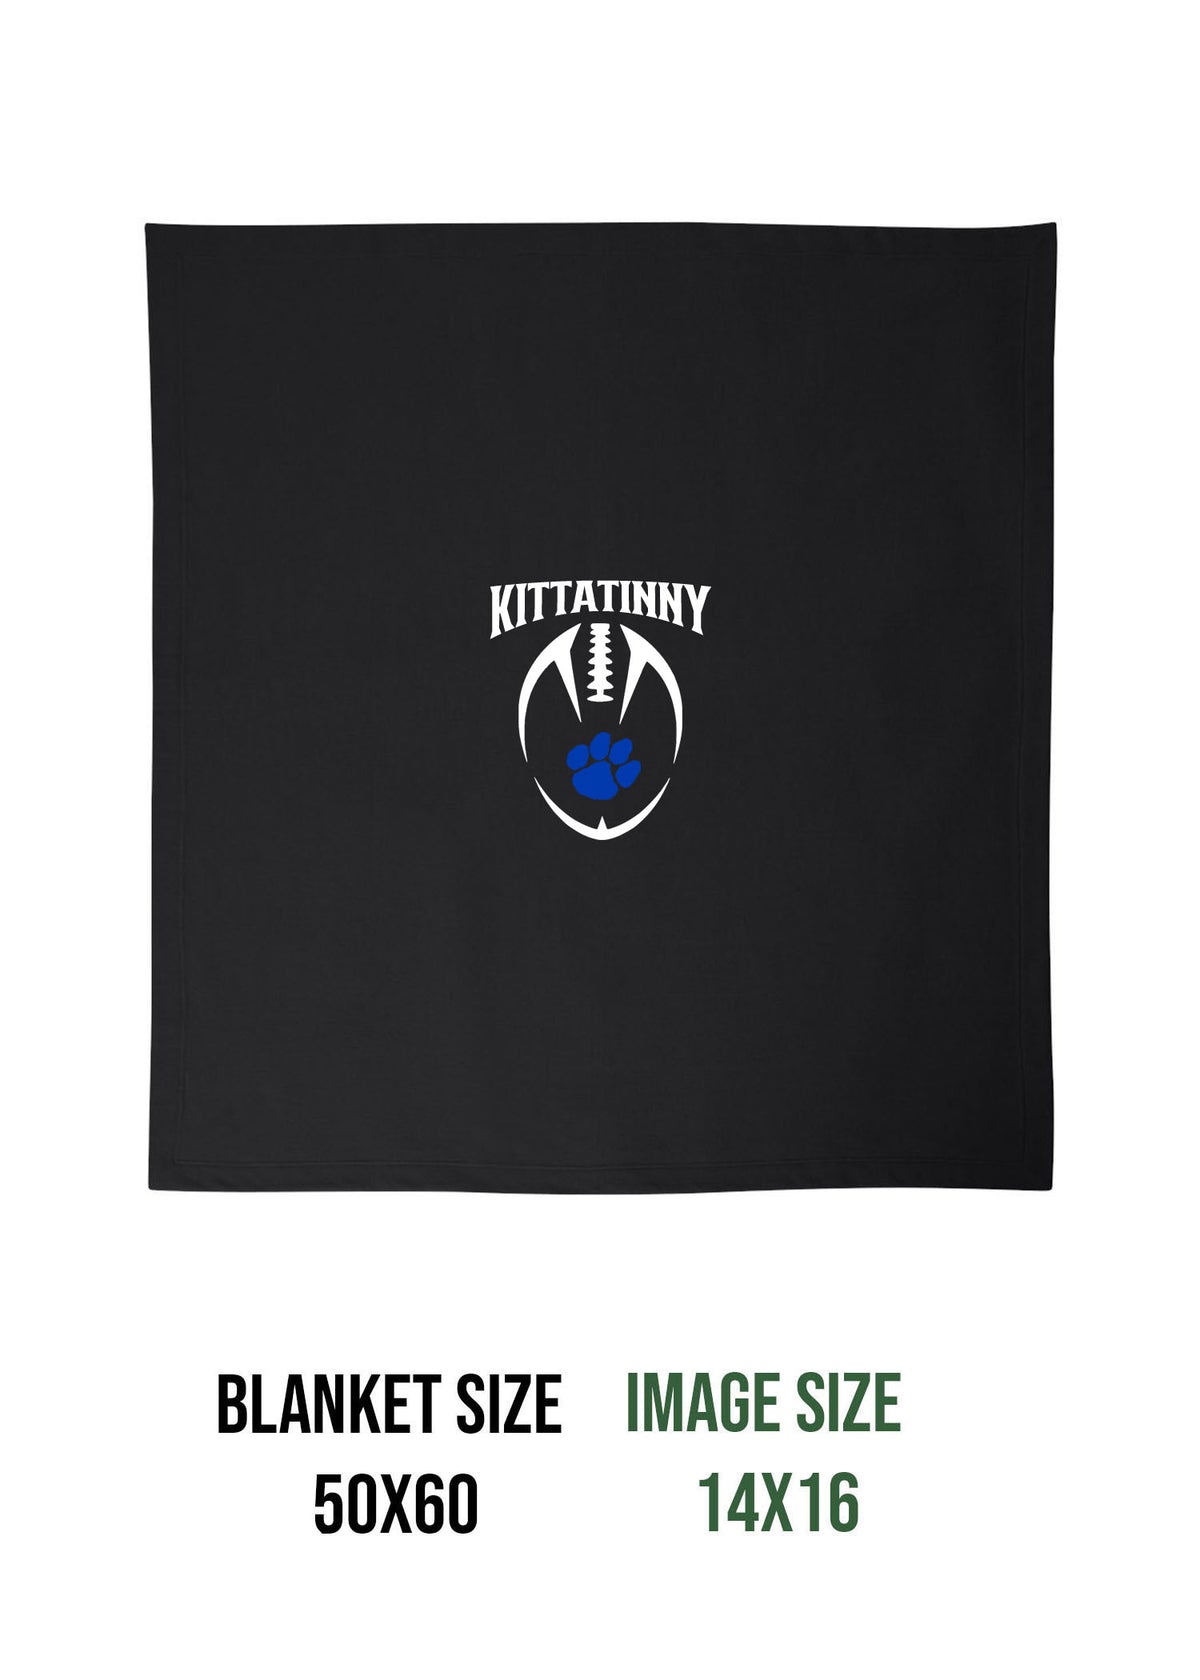 Kitattinny Football Design 8 Blanket